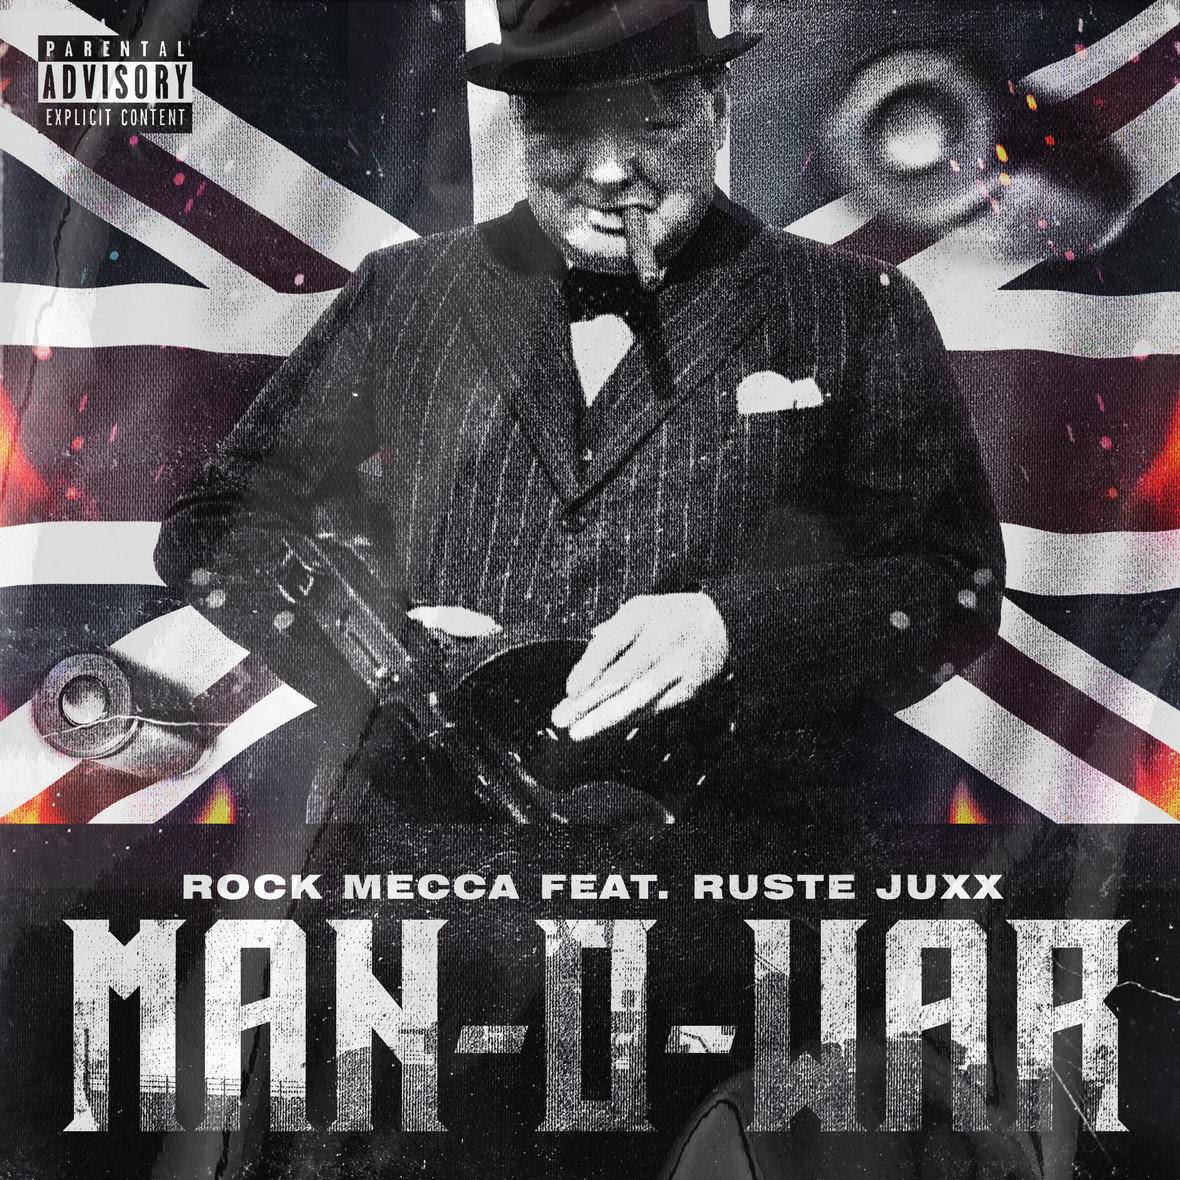 Rock Mecca Taps Ruste Juxx For “Man-O-War”